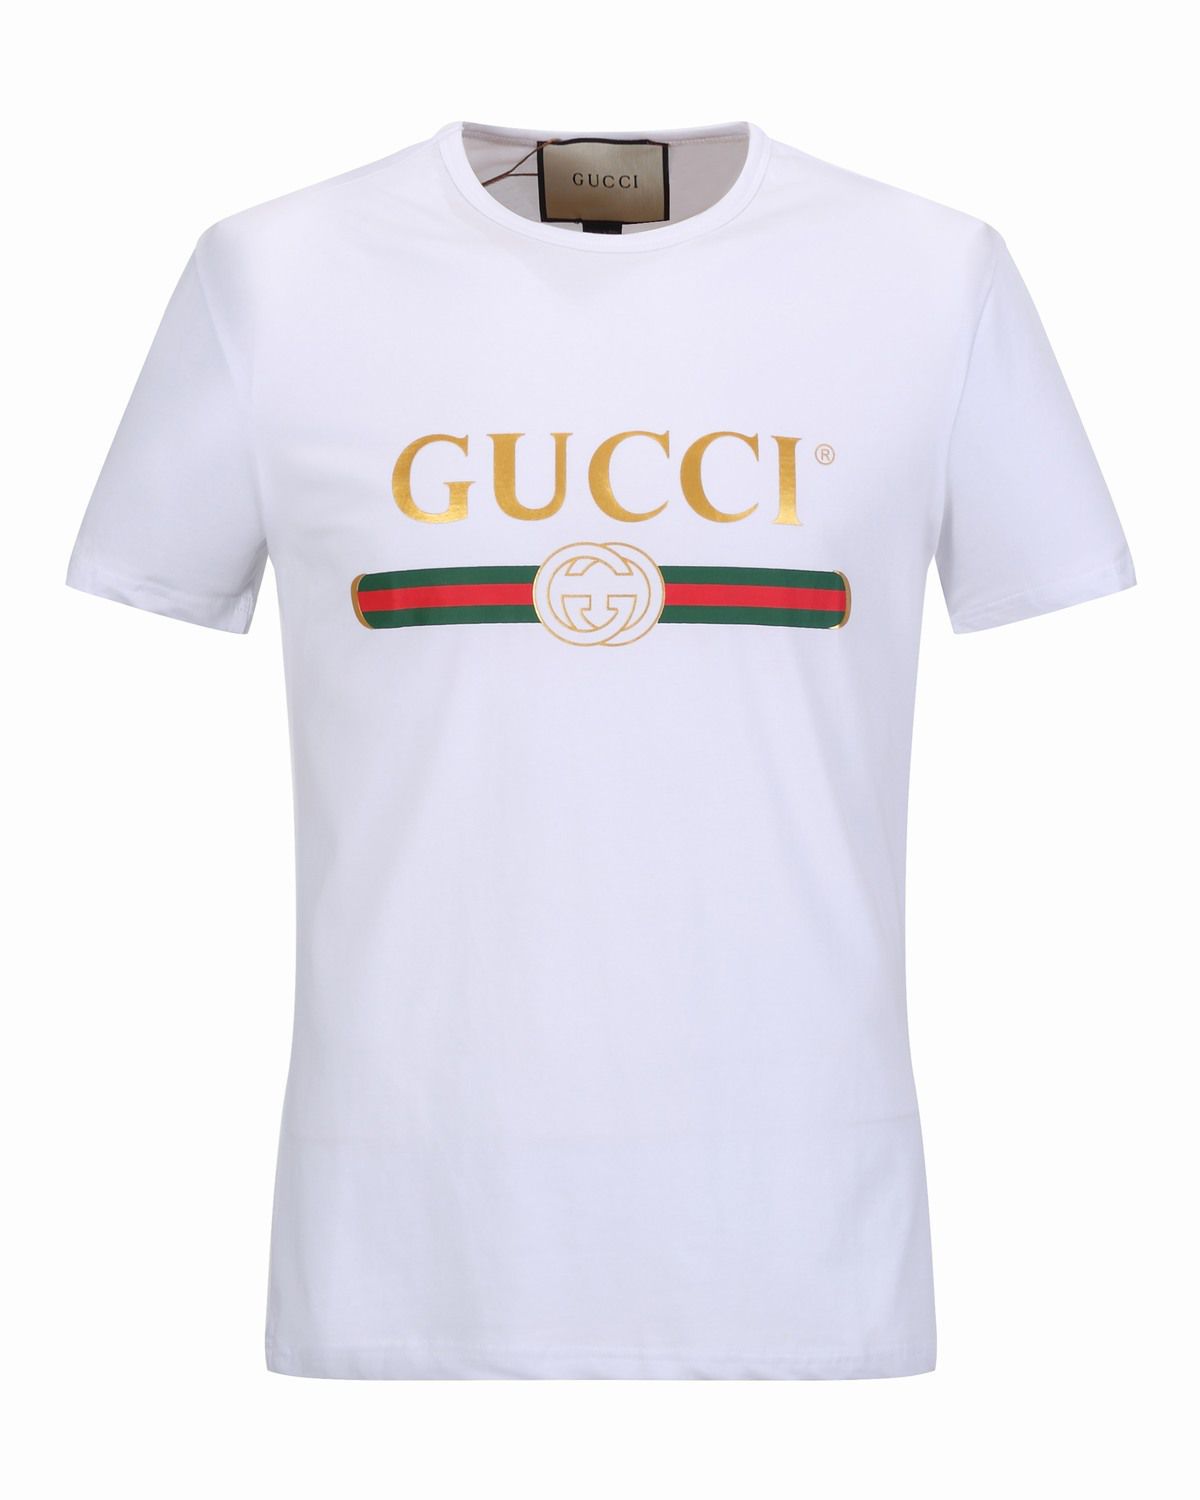 Gucci White Round T-Shirt - Buy Gucci 